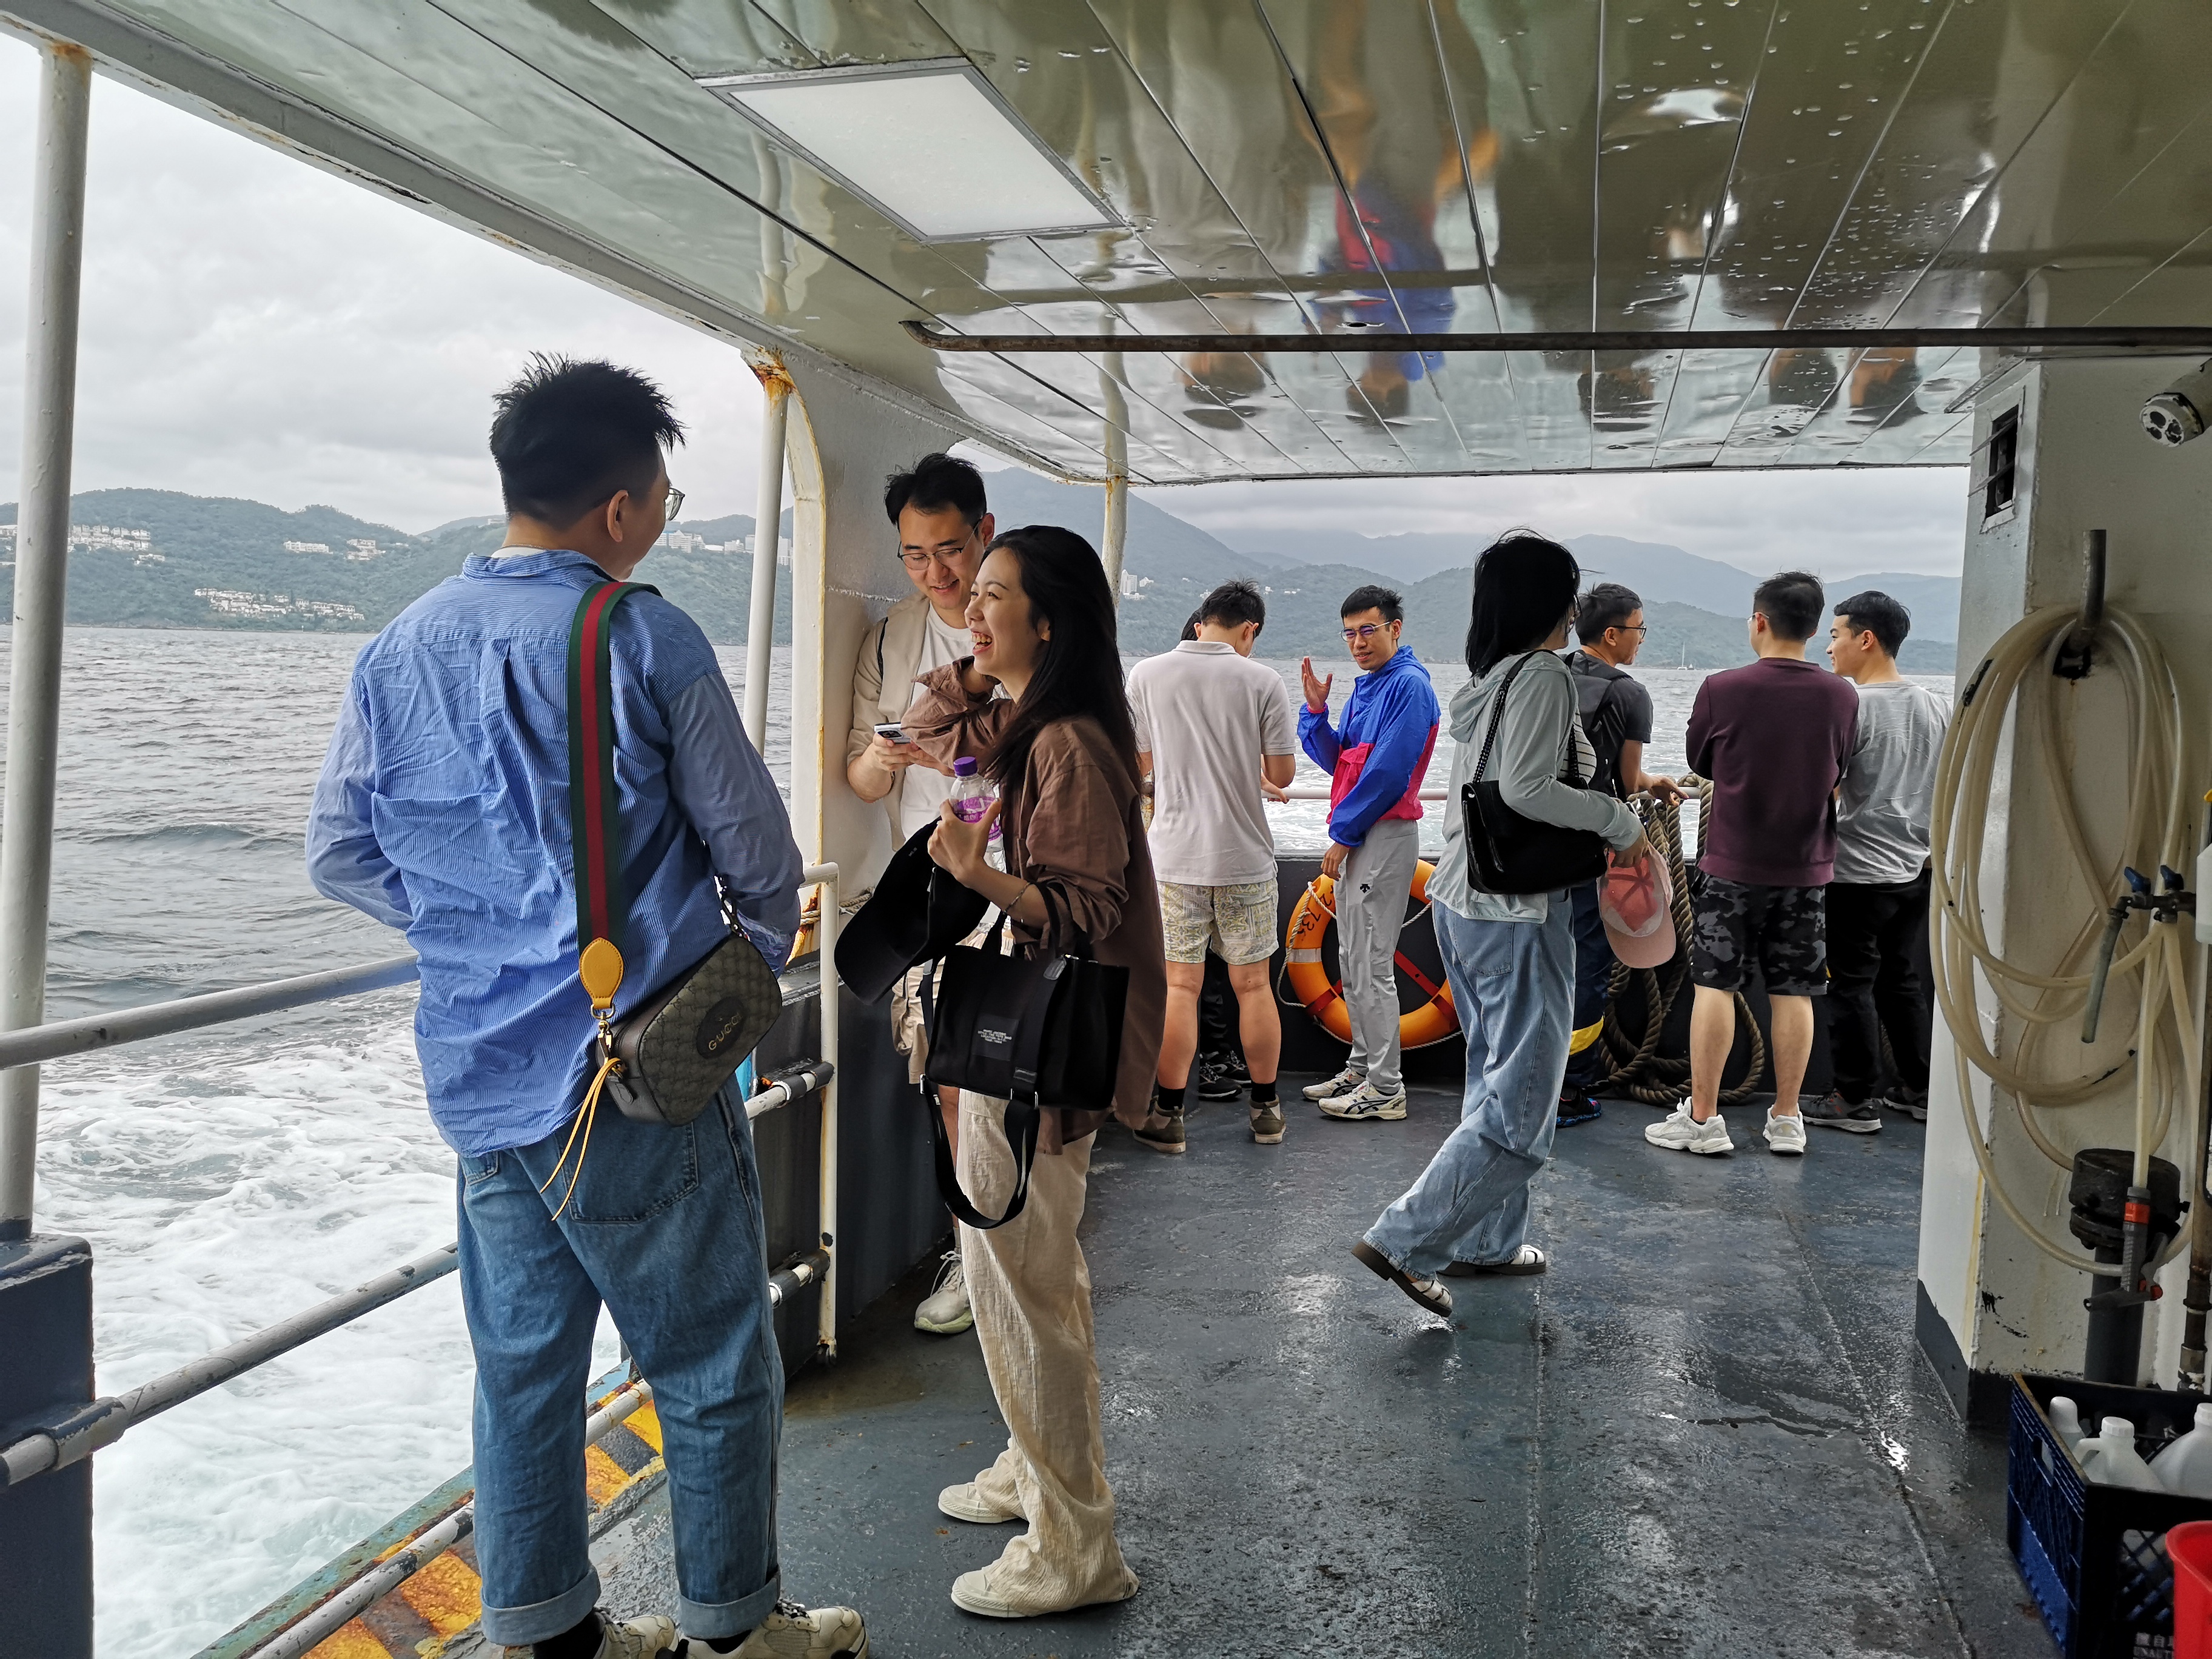 Students socializing inside the boat